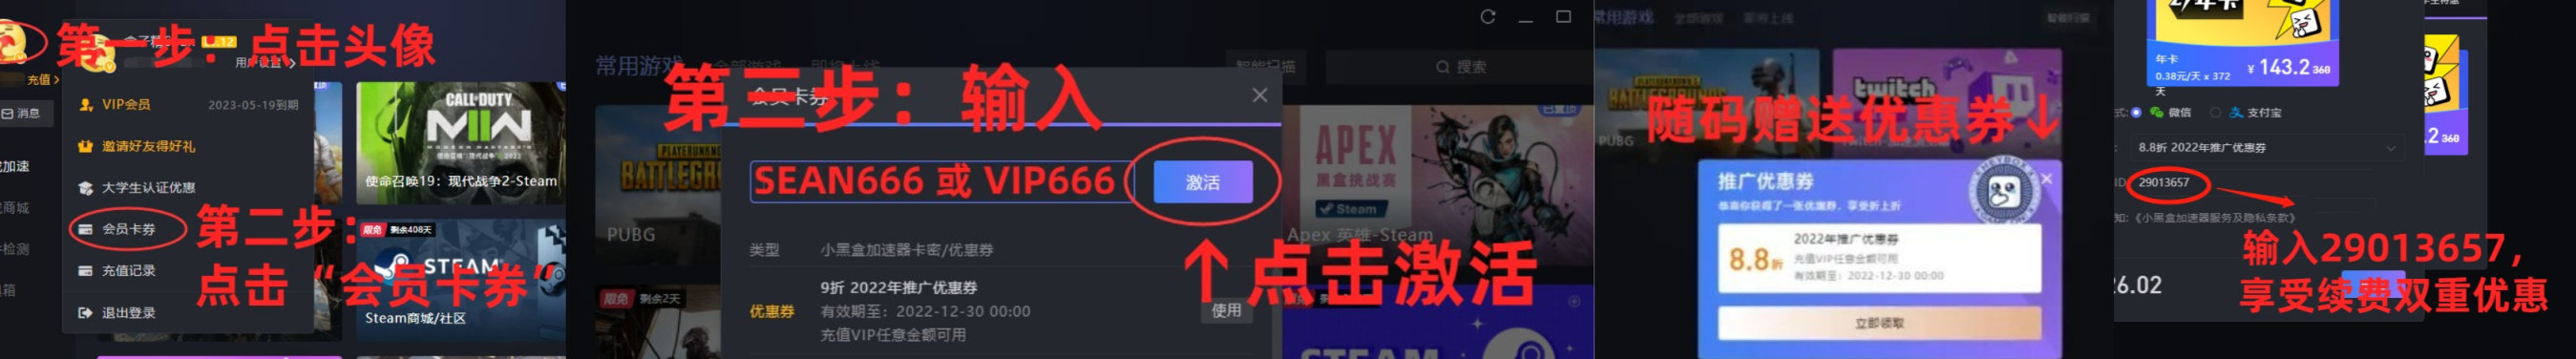 【PC游戏】腾讯《全境封锁 2》现已上线 ，制作人升迁出任育碧上海总经理-第8张